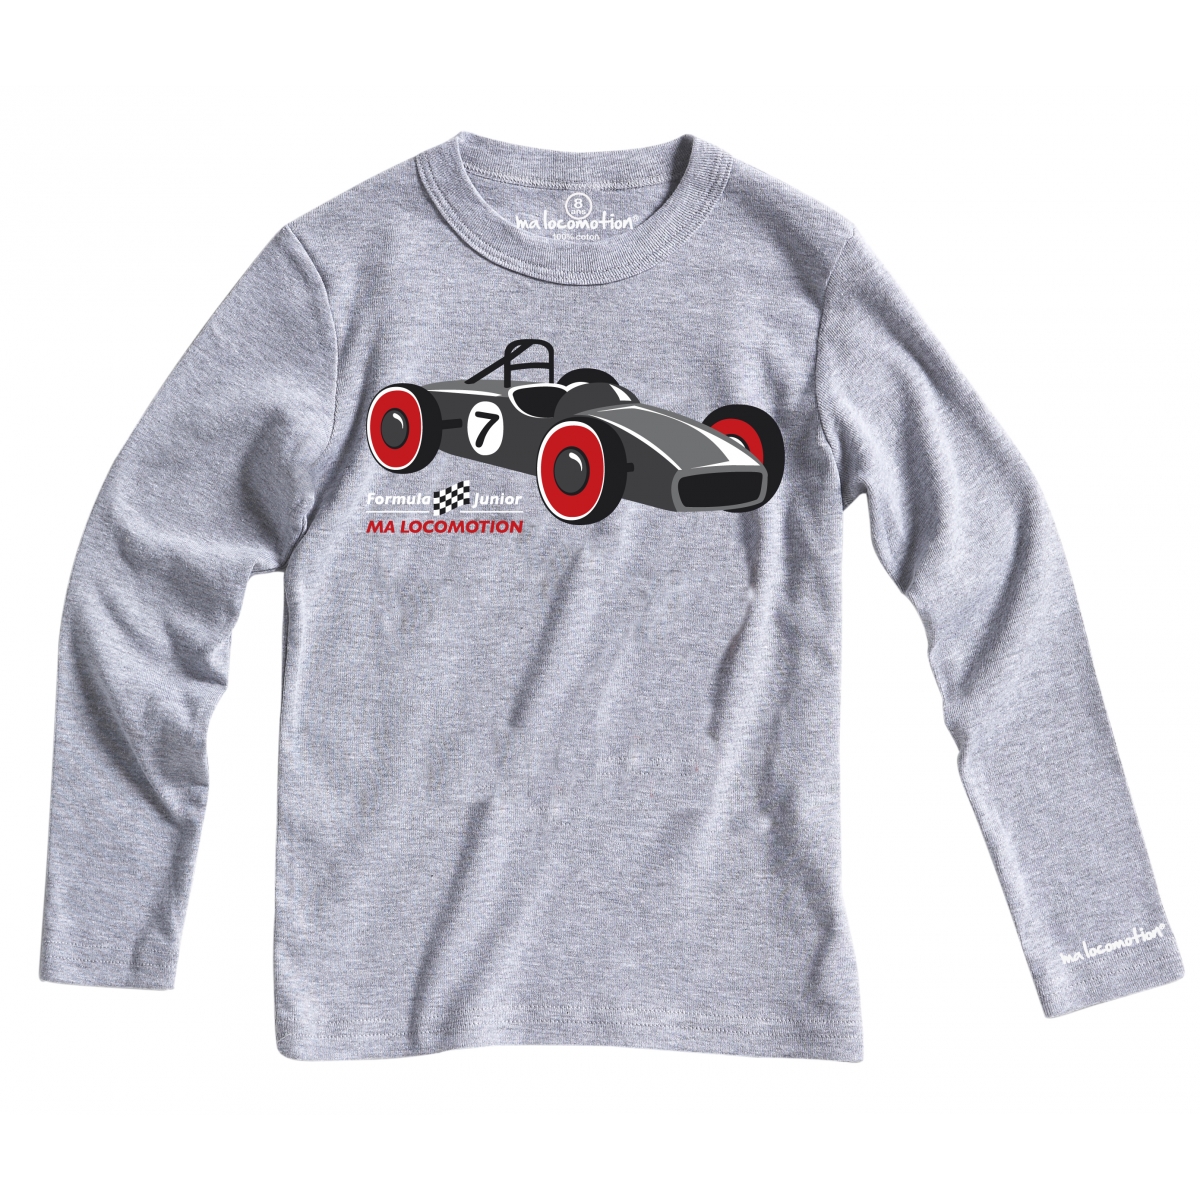 Racing car T-shirt - Silver grey